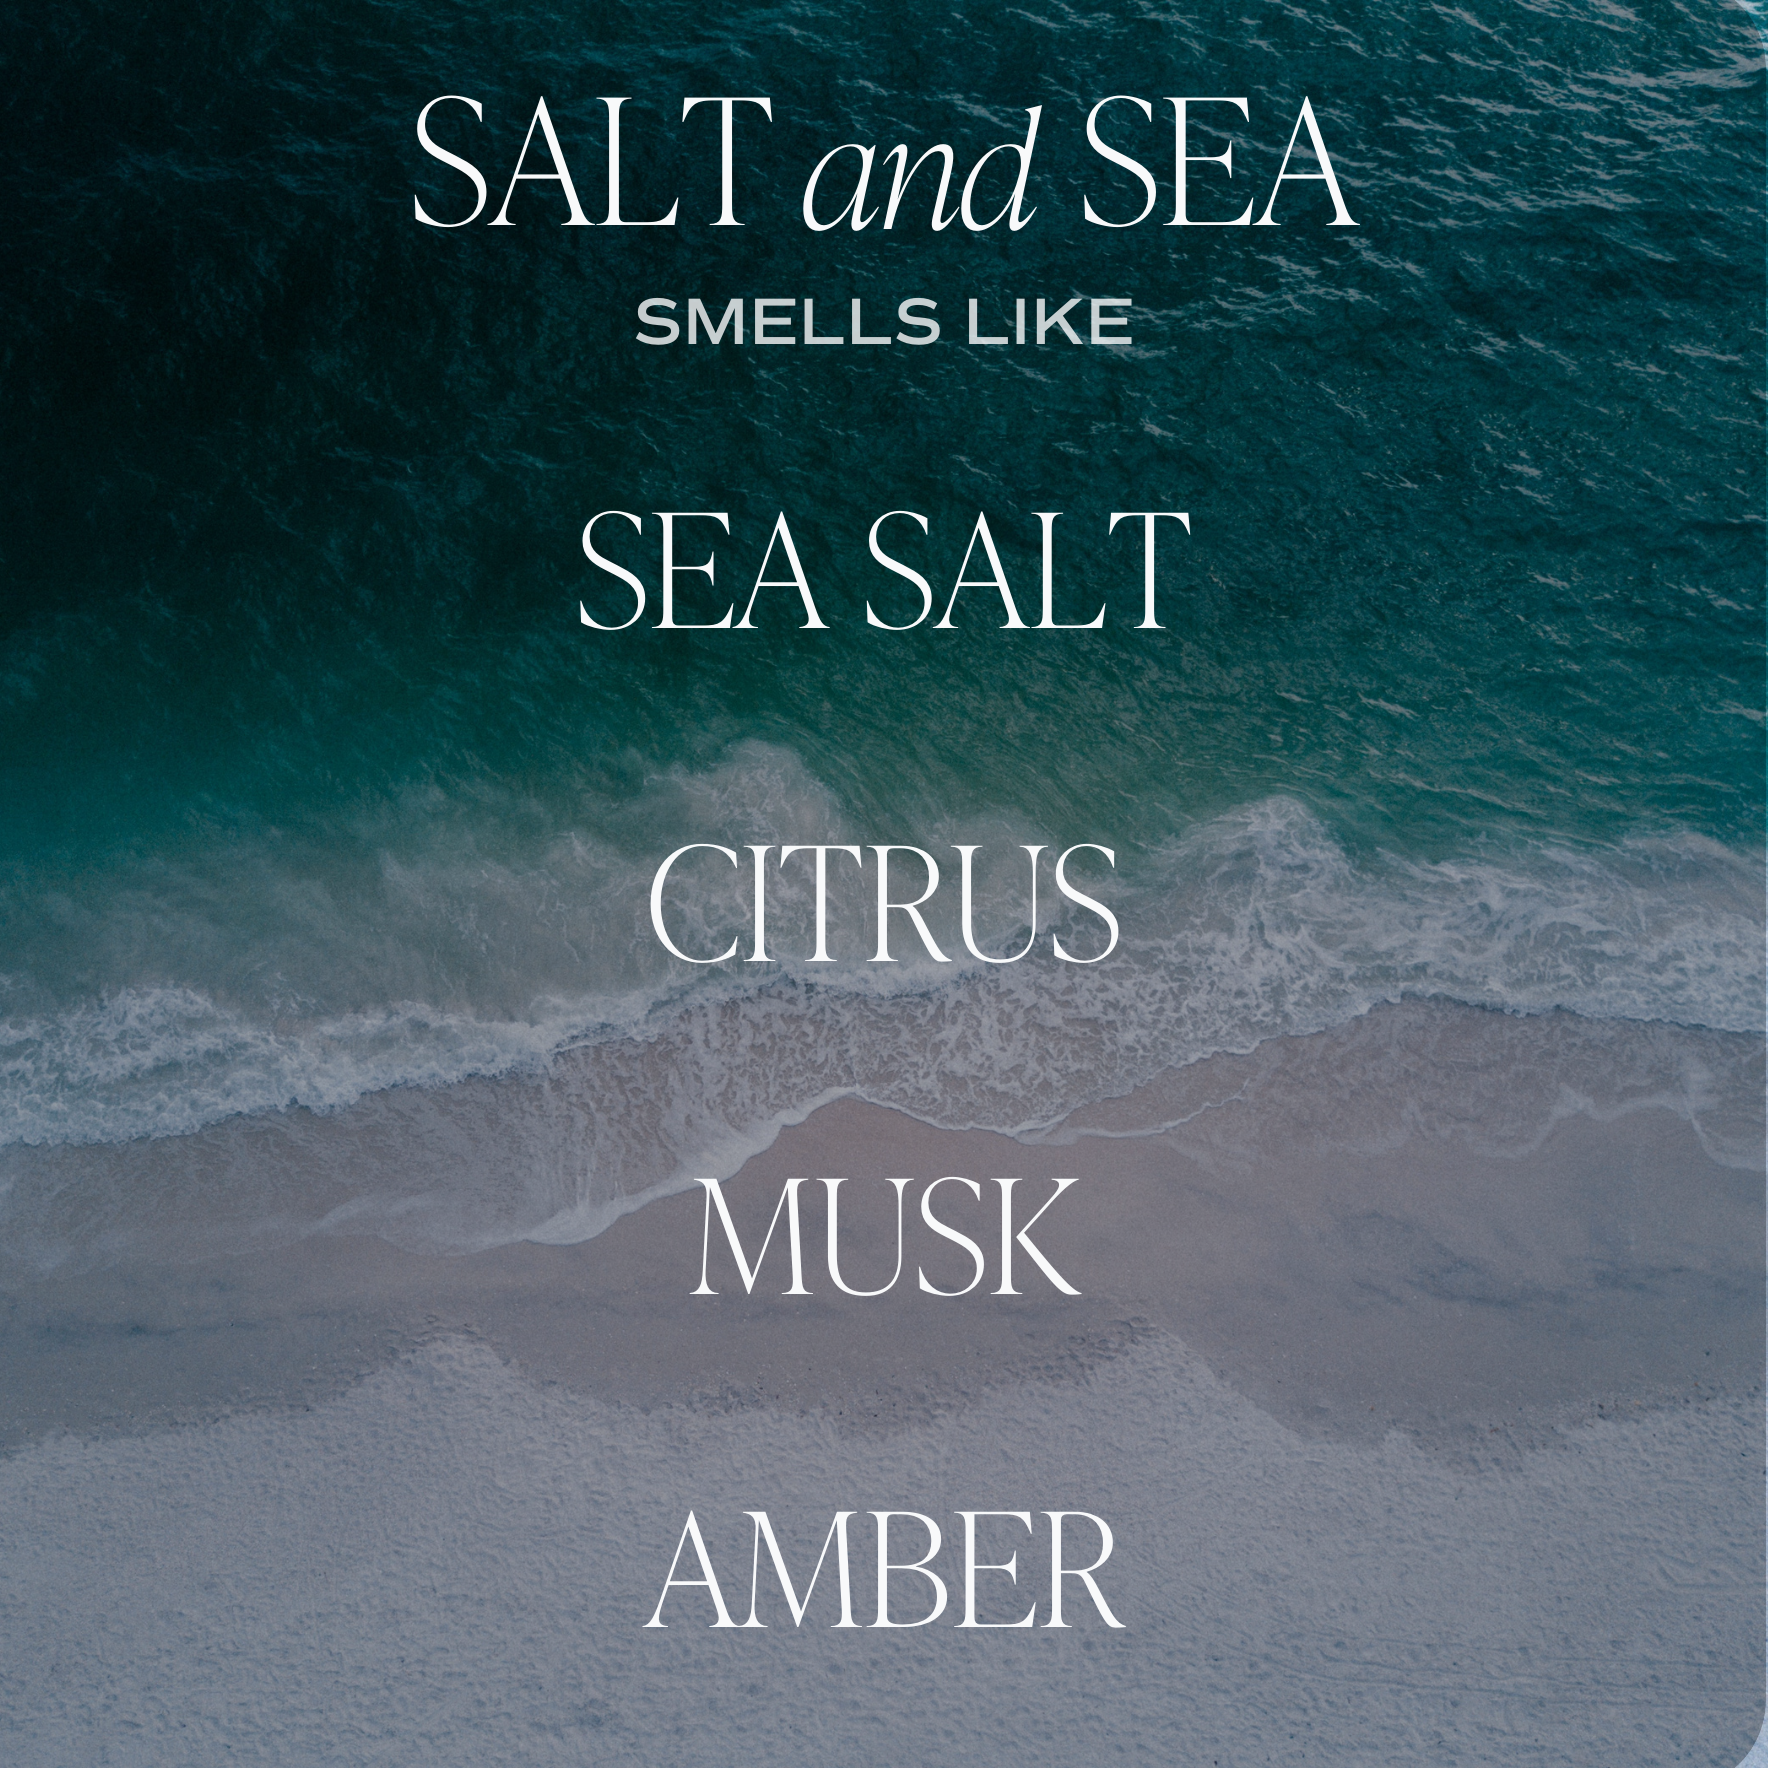 Vela de soja Salt and Sea